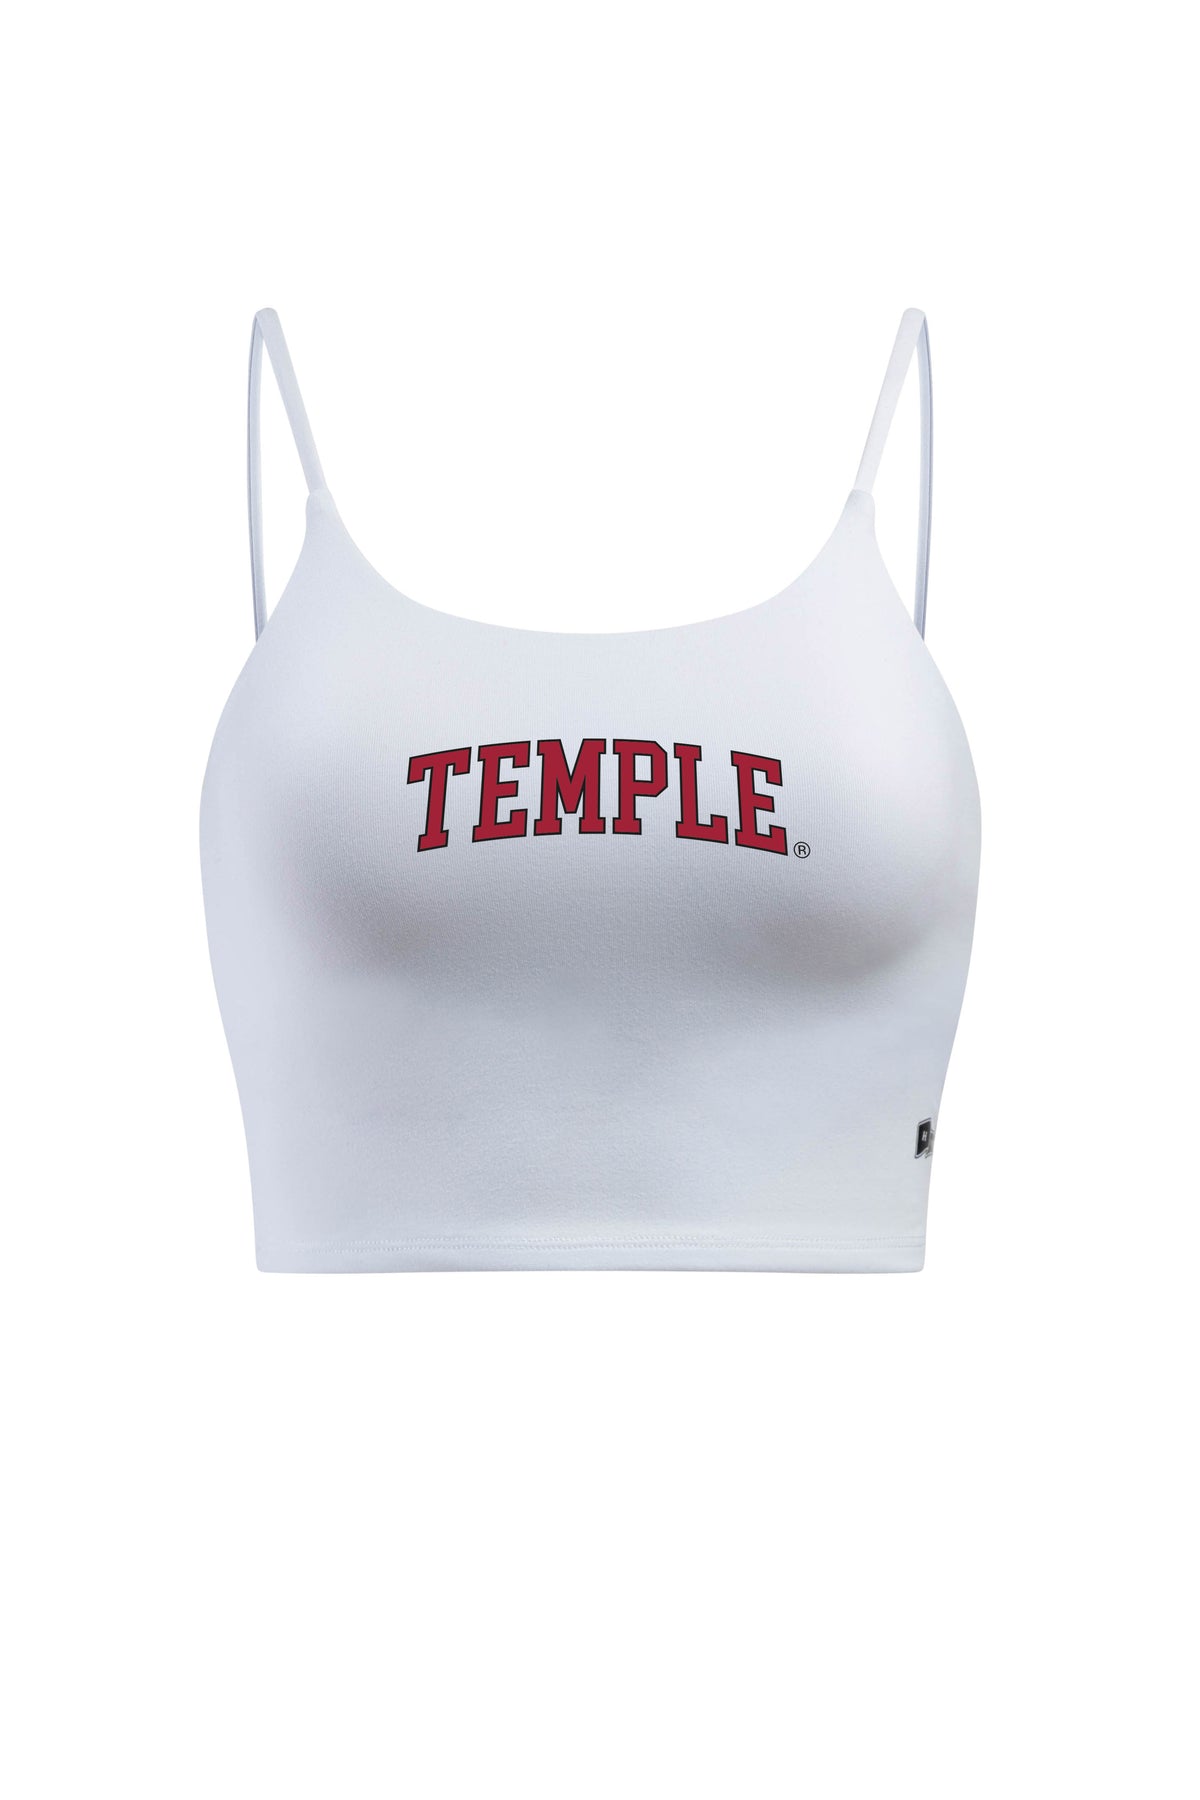 Temple University Bra Tank Top